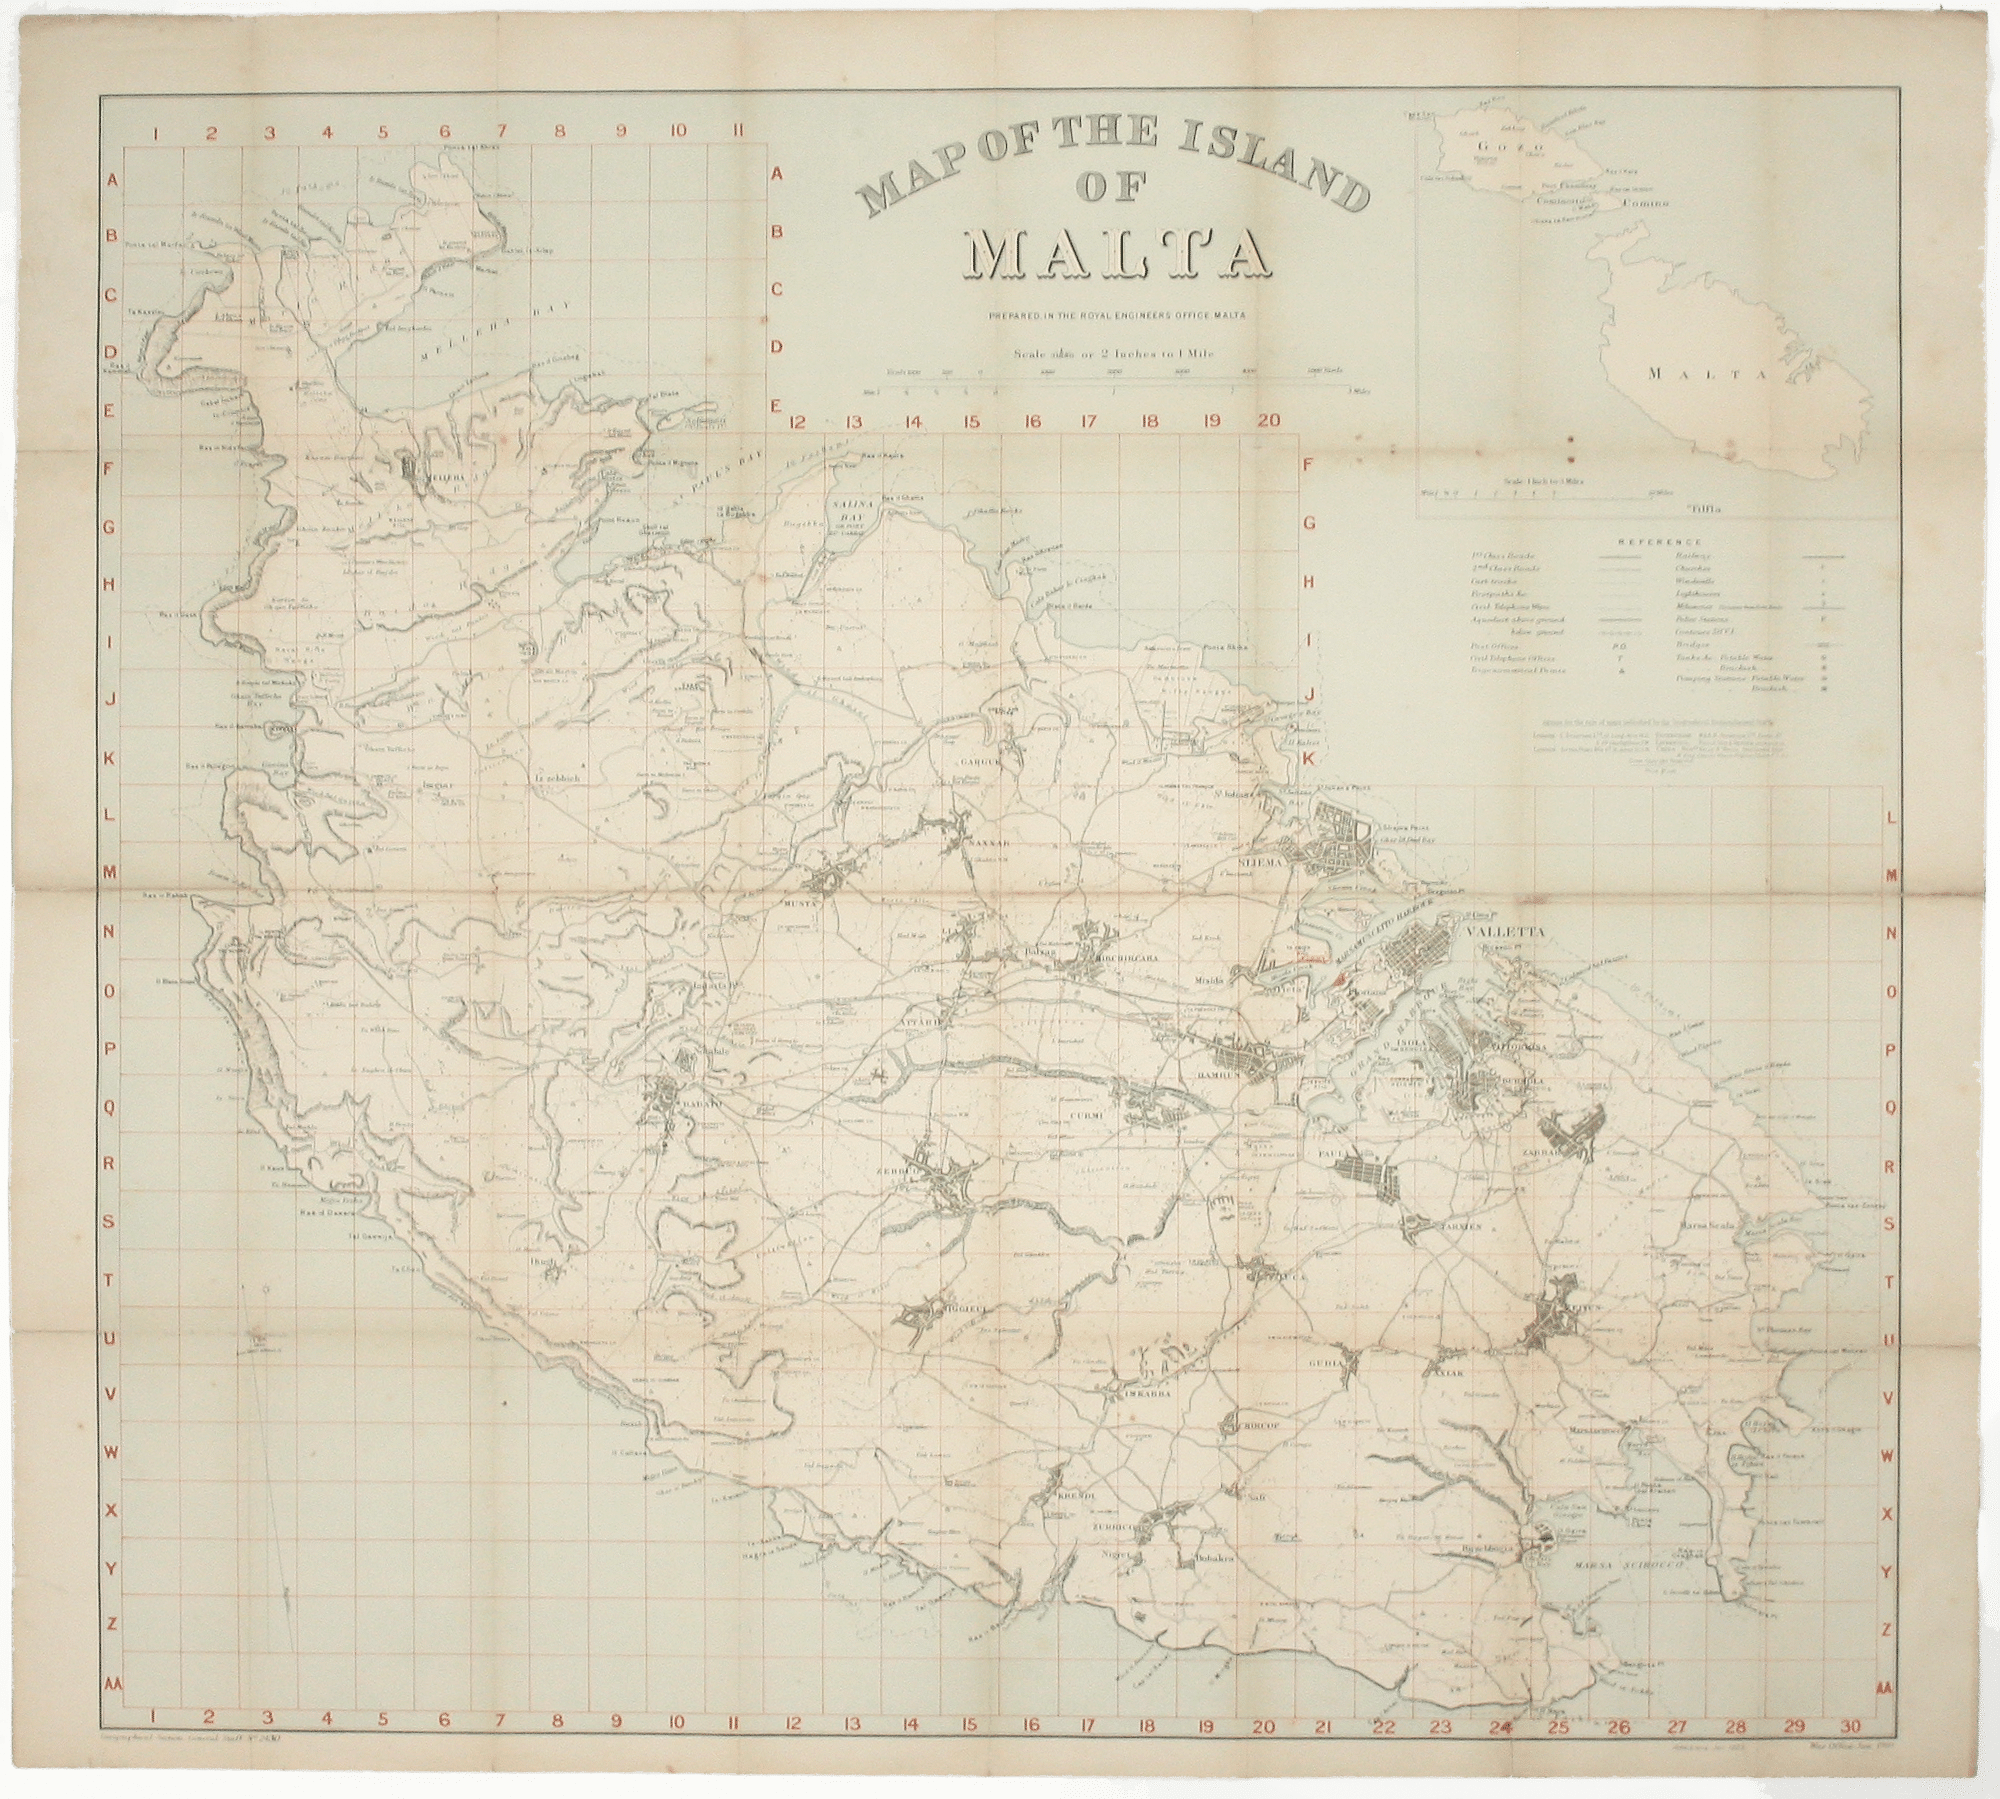 War Office Map of Malta